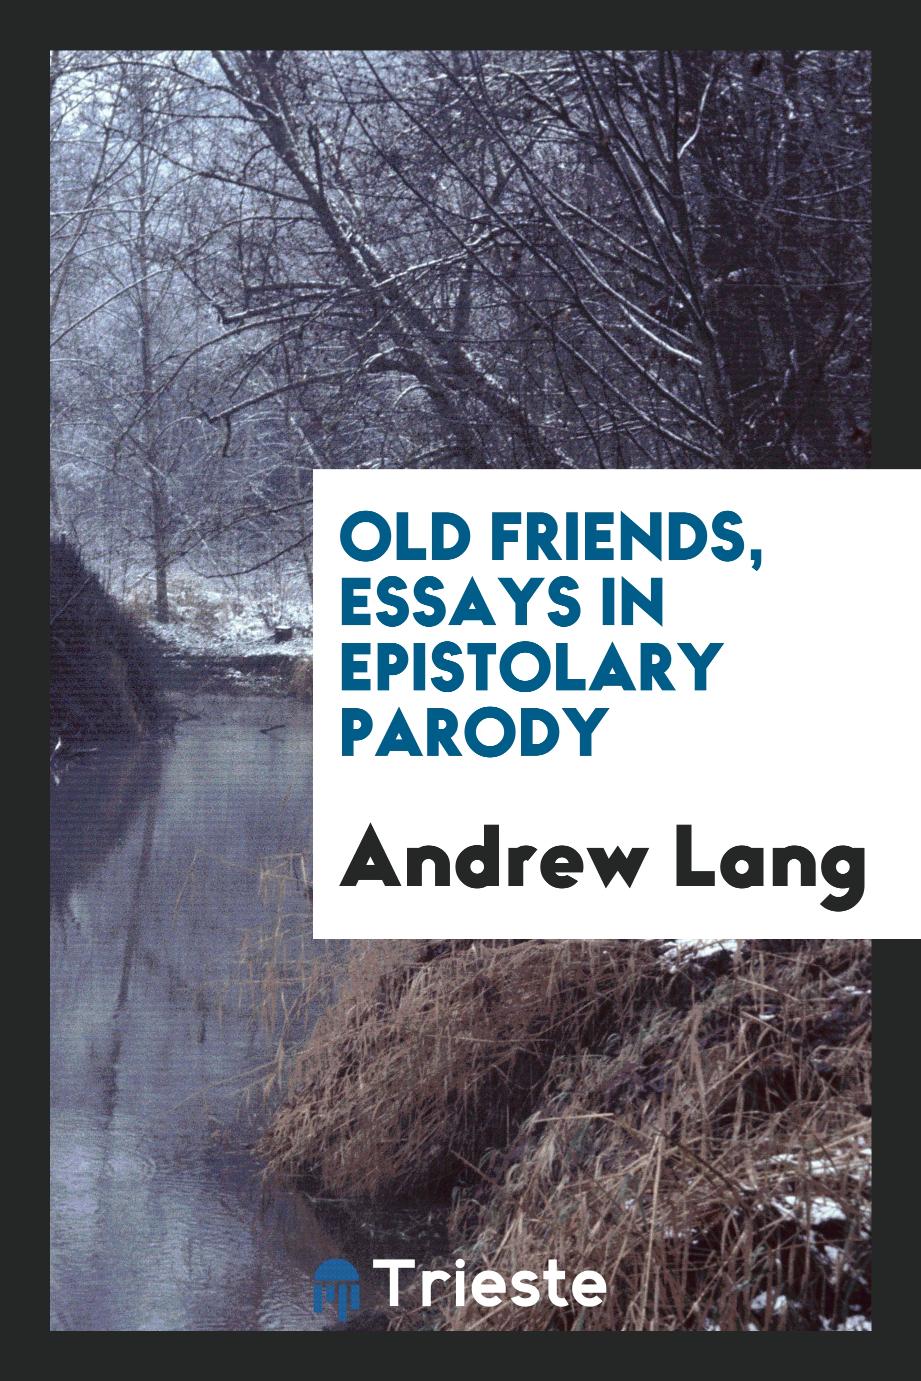 Old friends, essays in epistolary parody